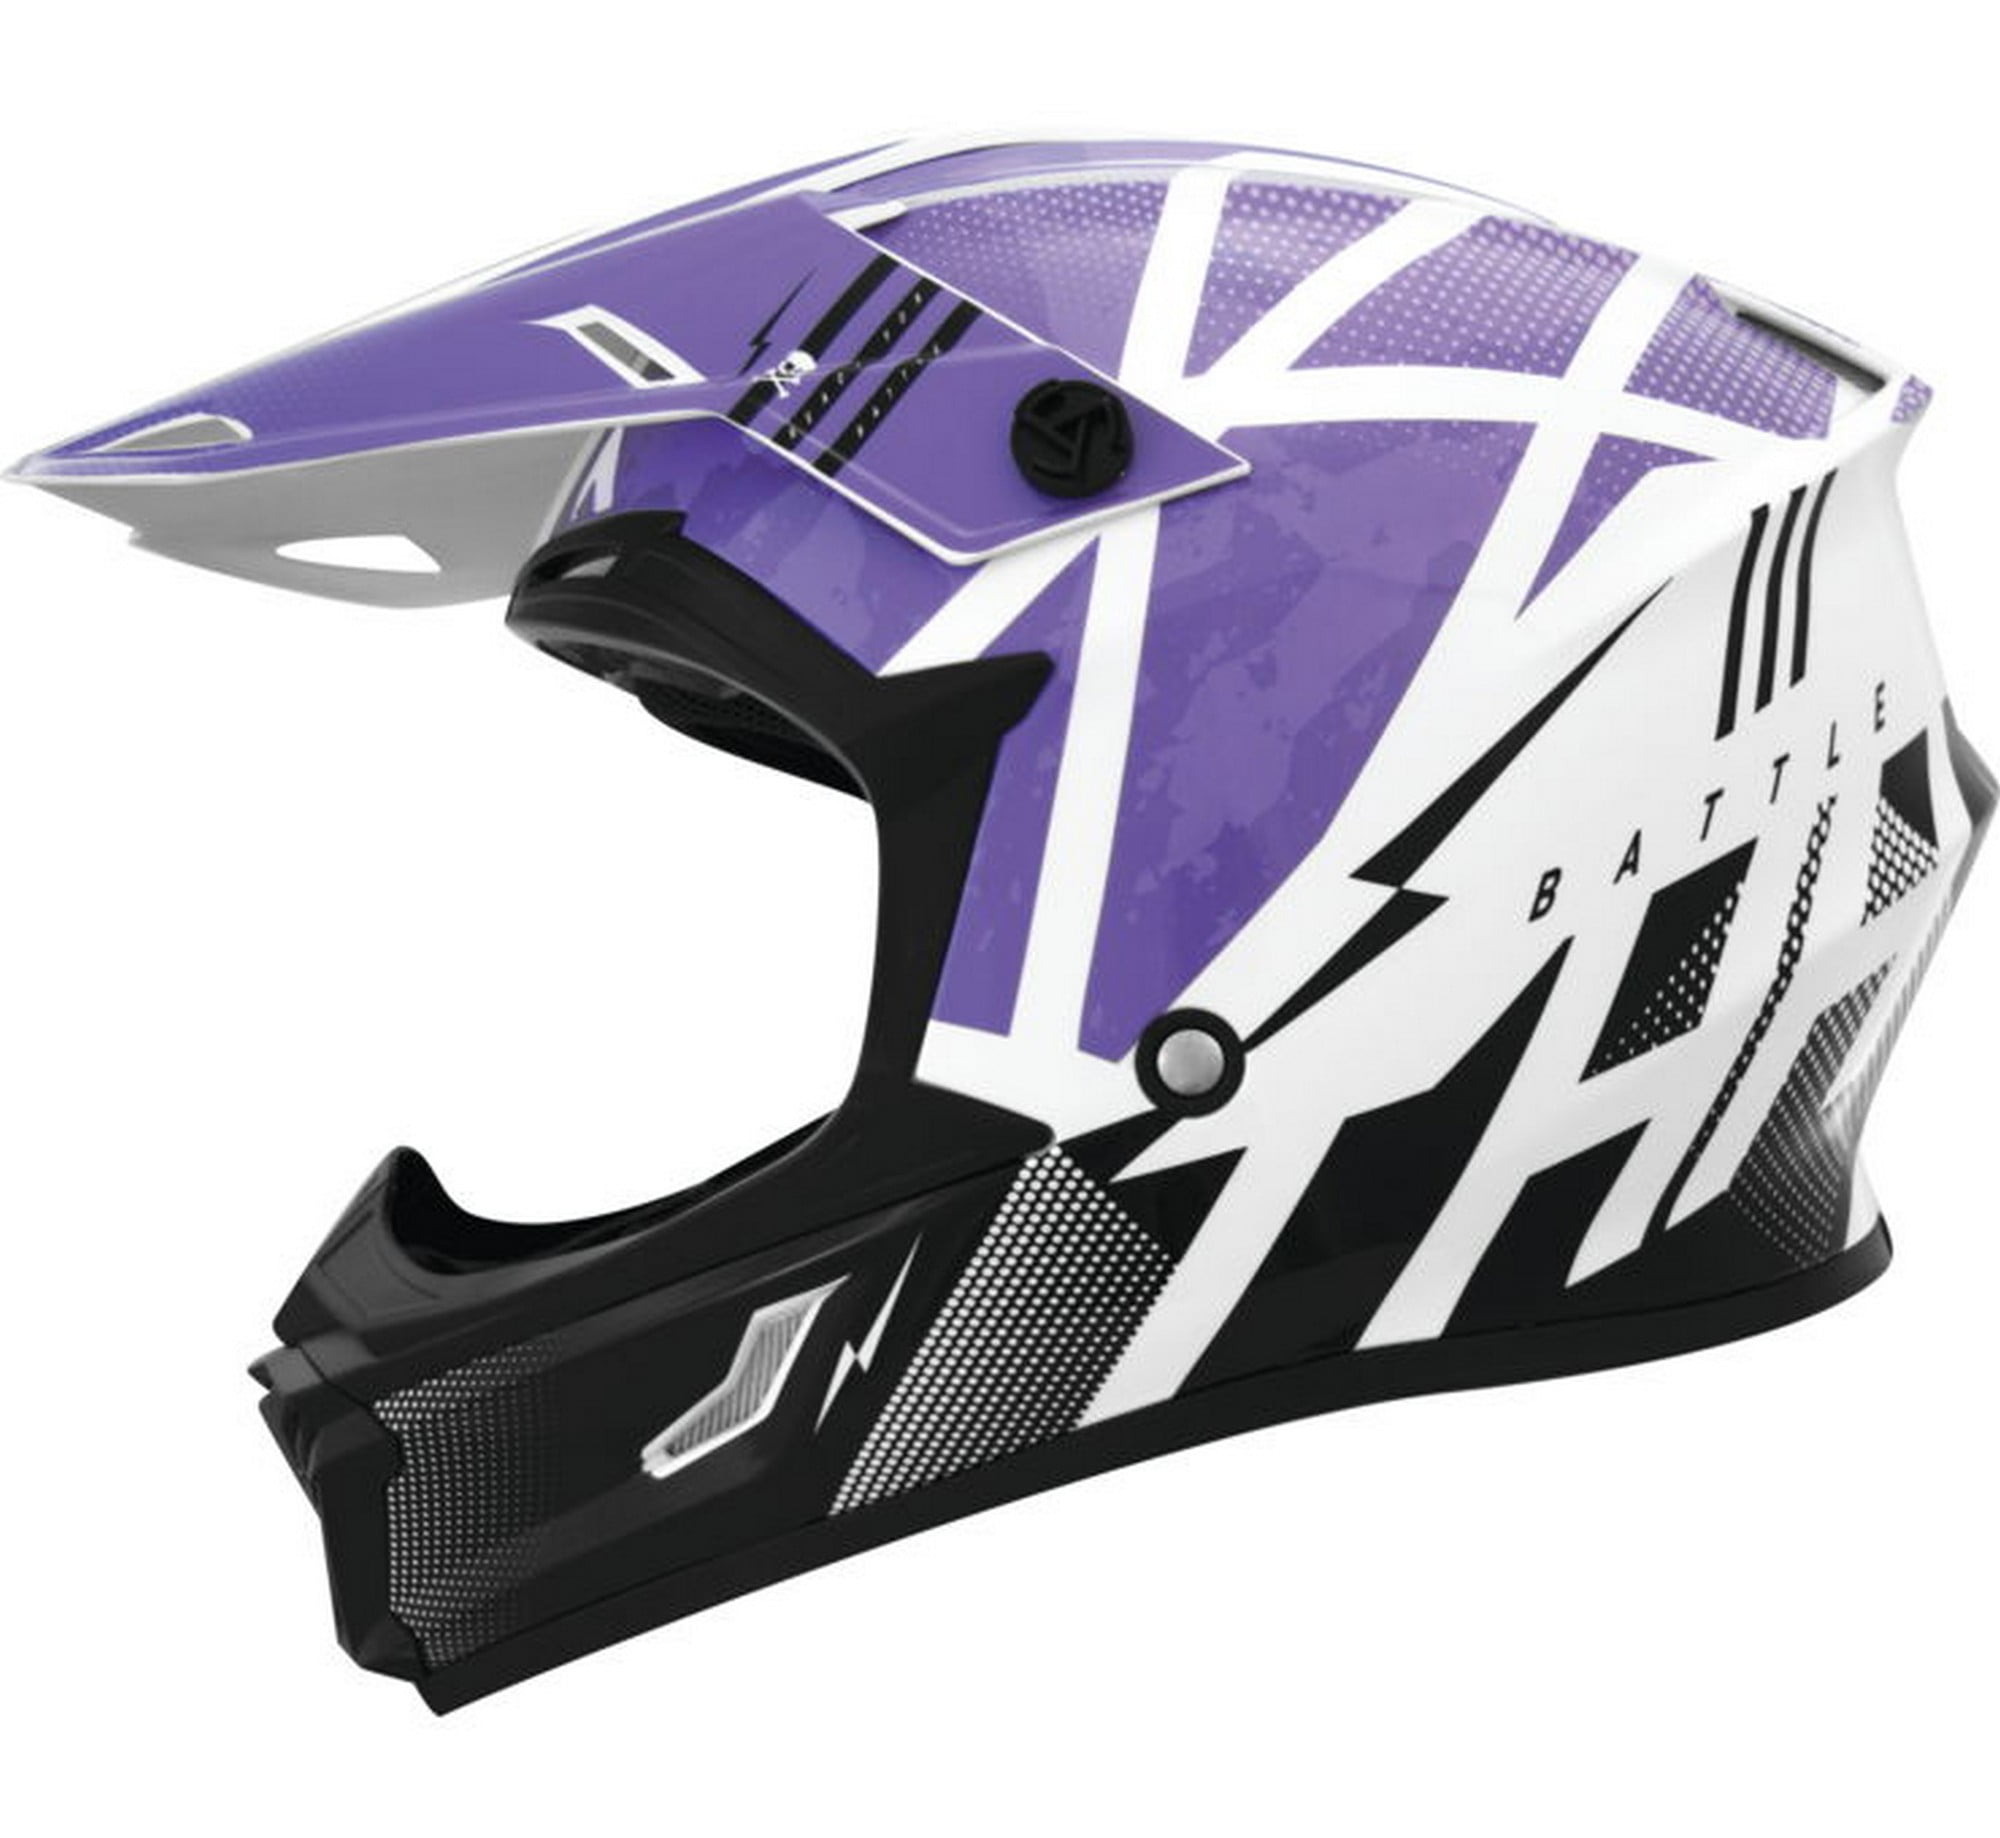 thh motocross helmet price